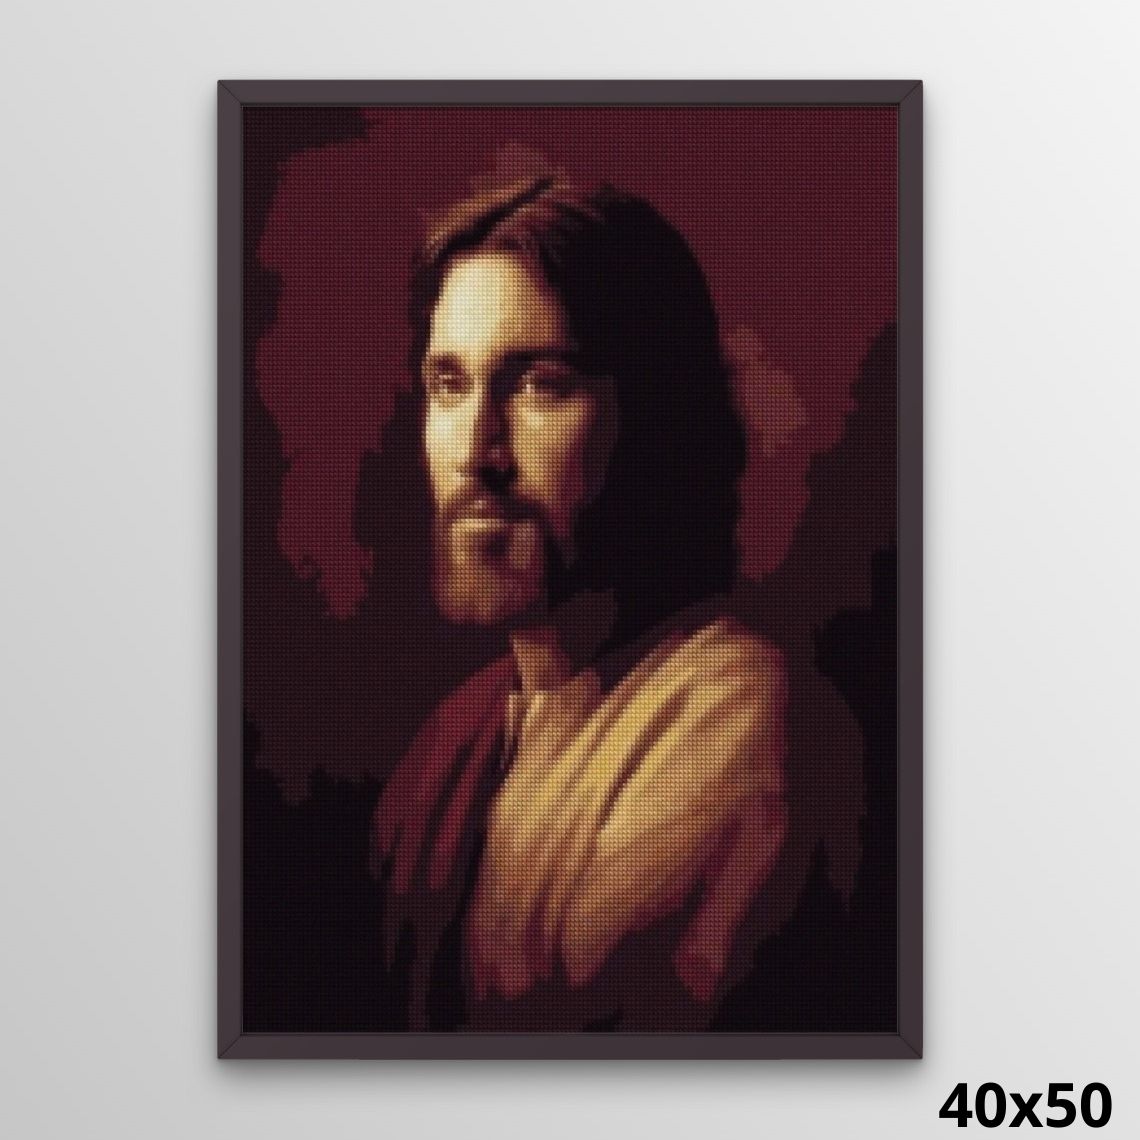 Portrait of Christ 40x50 Diamond Painting